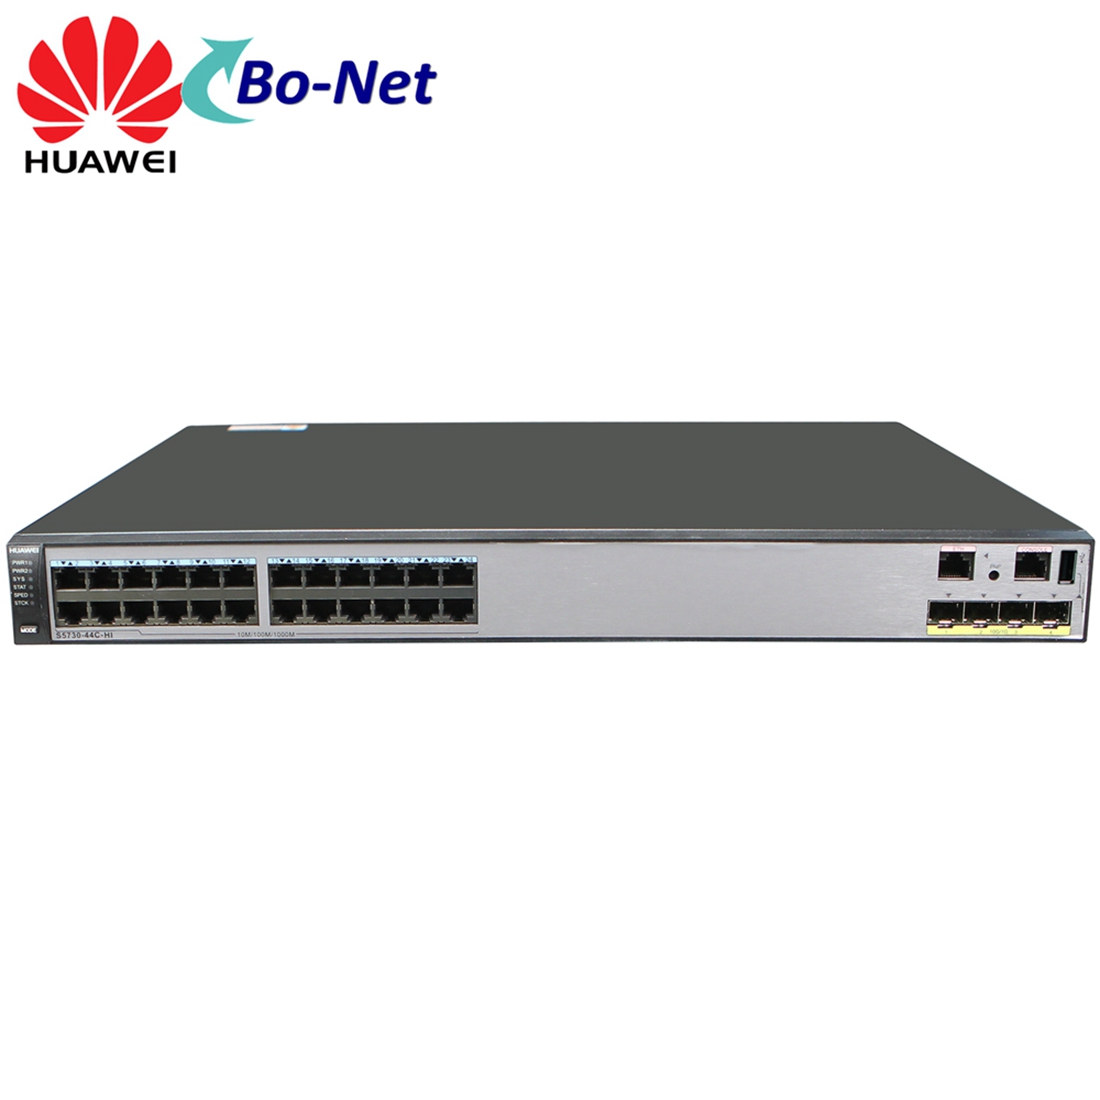 Huawei S5730-44C-HI 24 Port Gigabit 4x 10GE SFP+ Uplink Port Layer 3 Switch